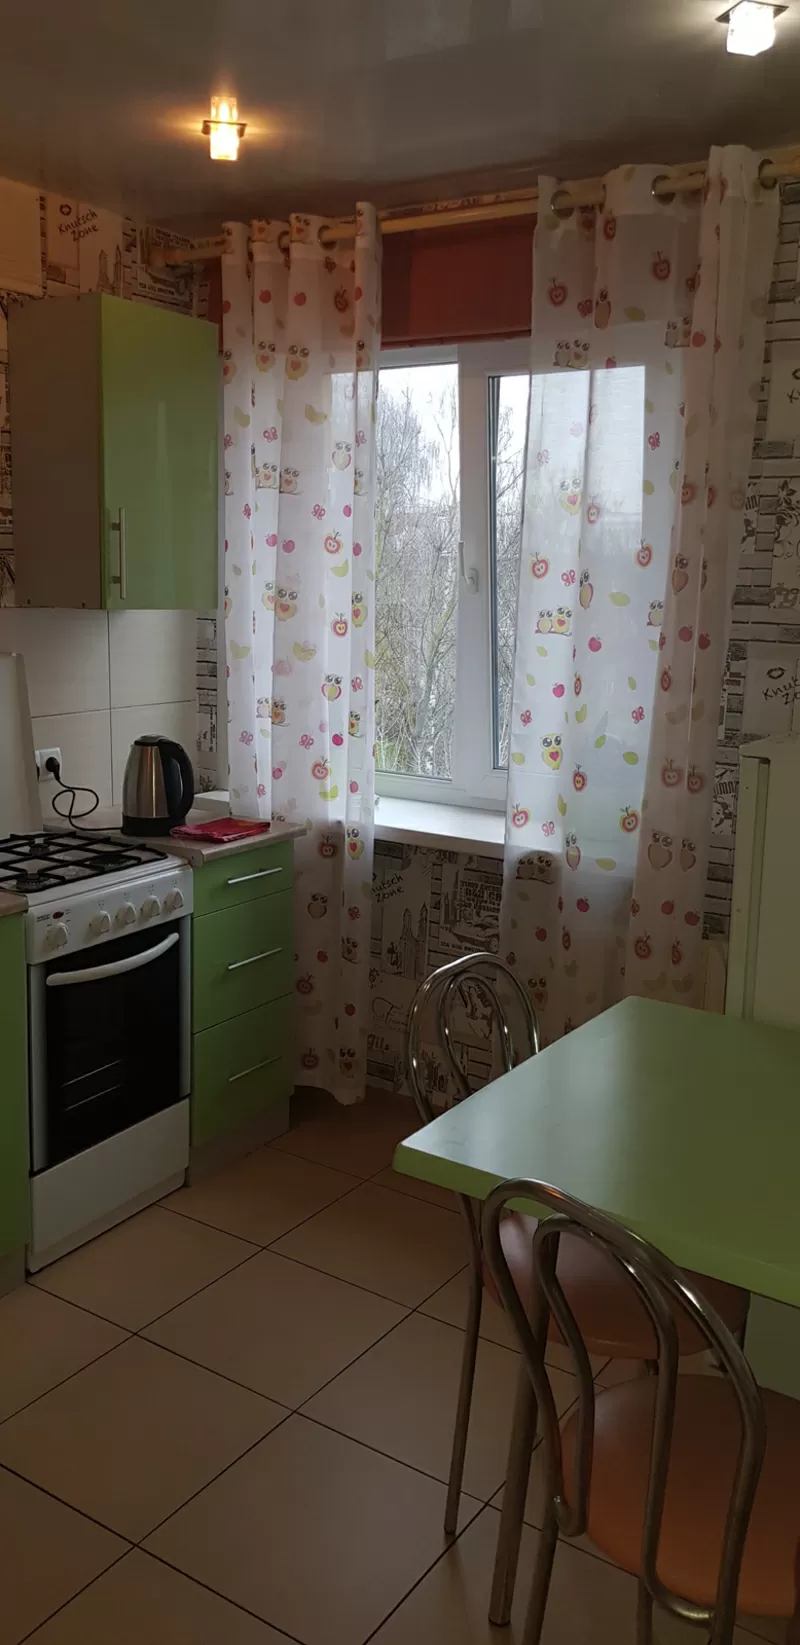 1 комнатная квартира посуточно в центре Минска 5